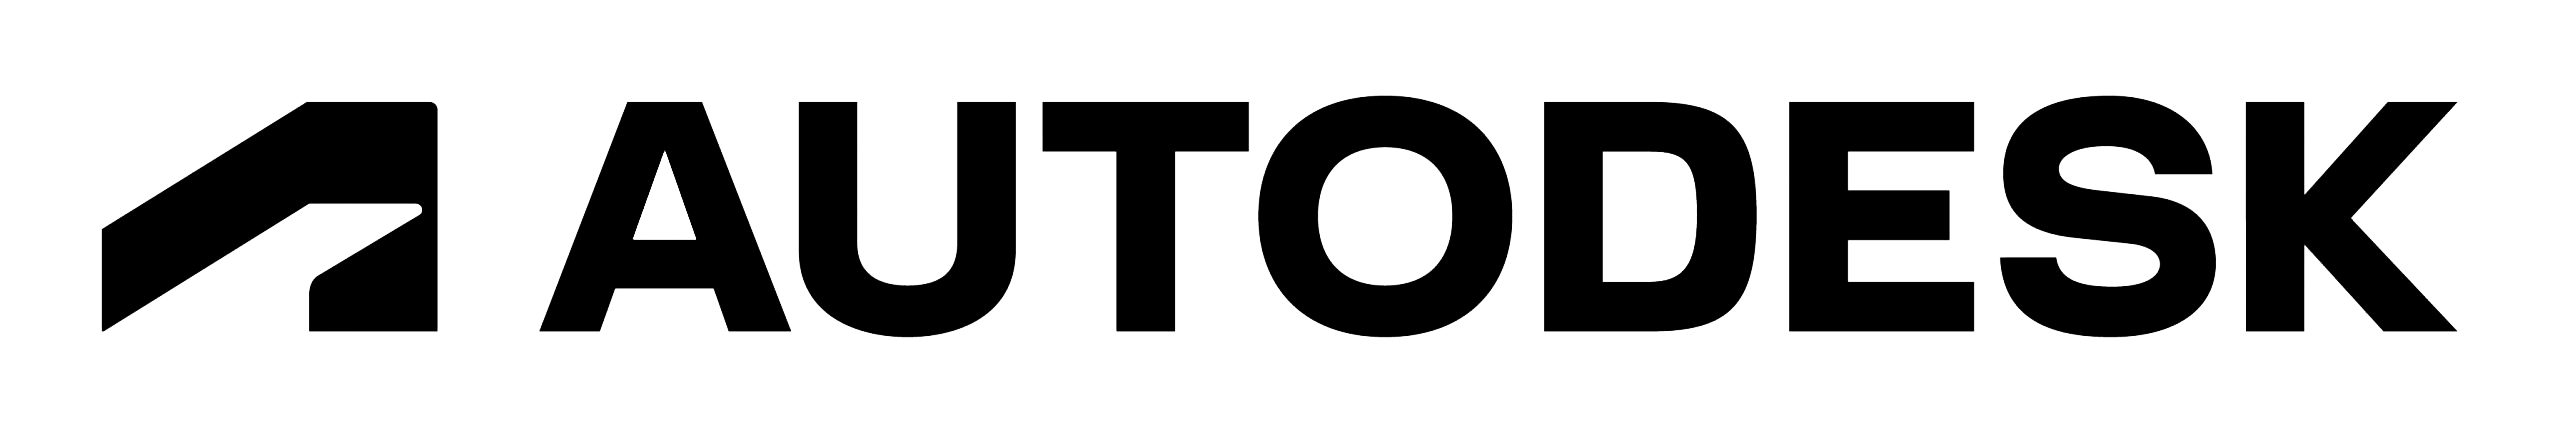 logo autodesk 2022 transparence